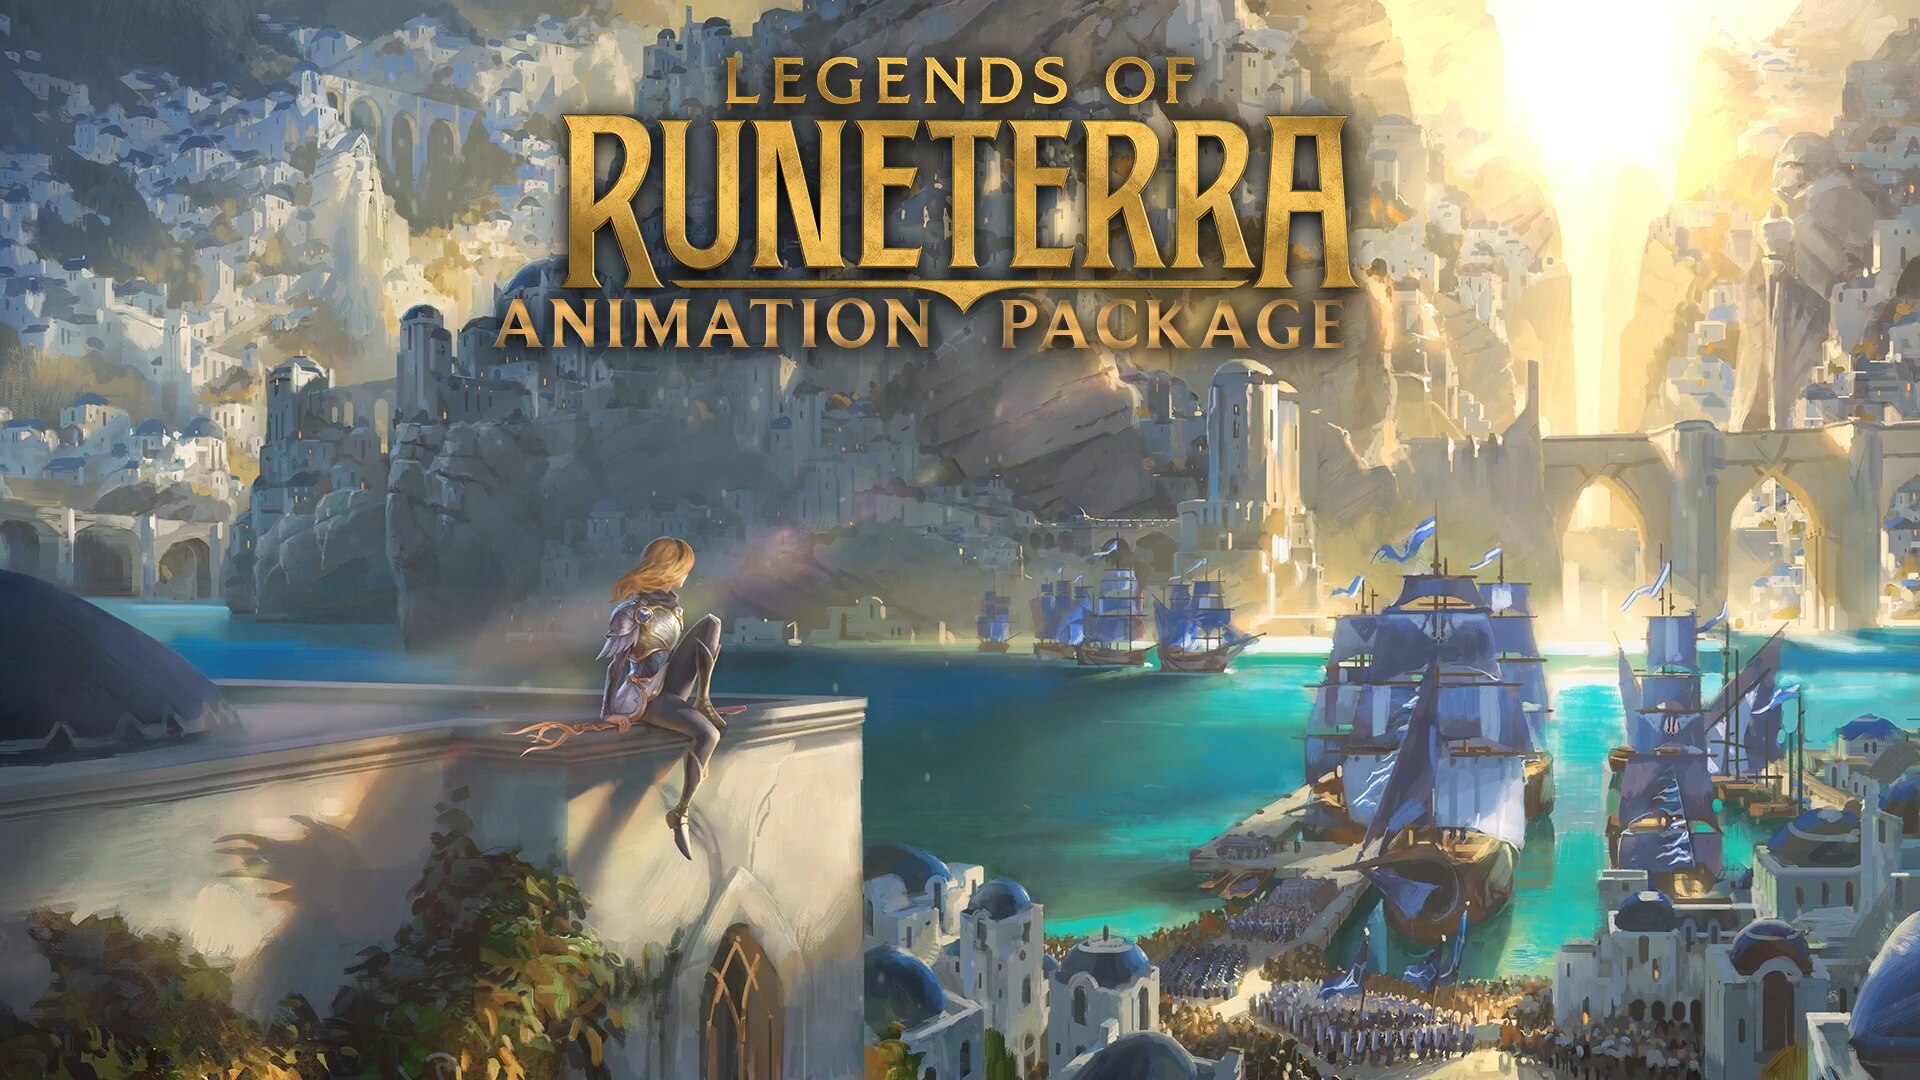 Viego Animated Wallpaper - Legends of Runeterra 